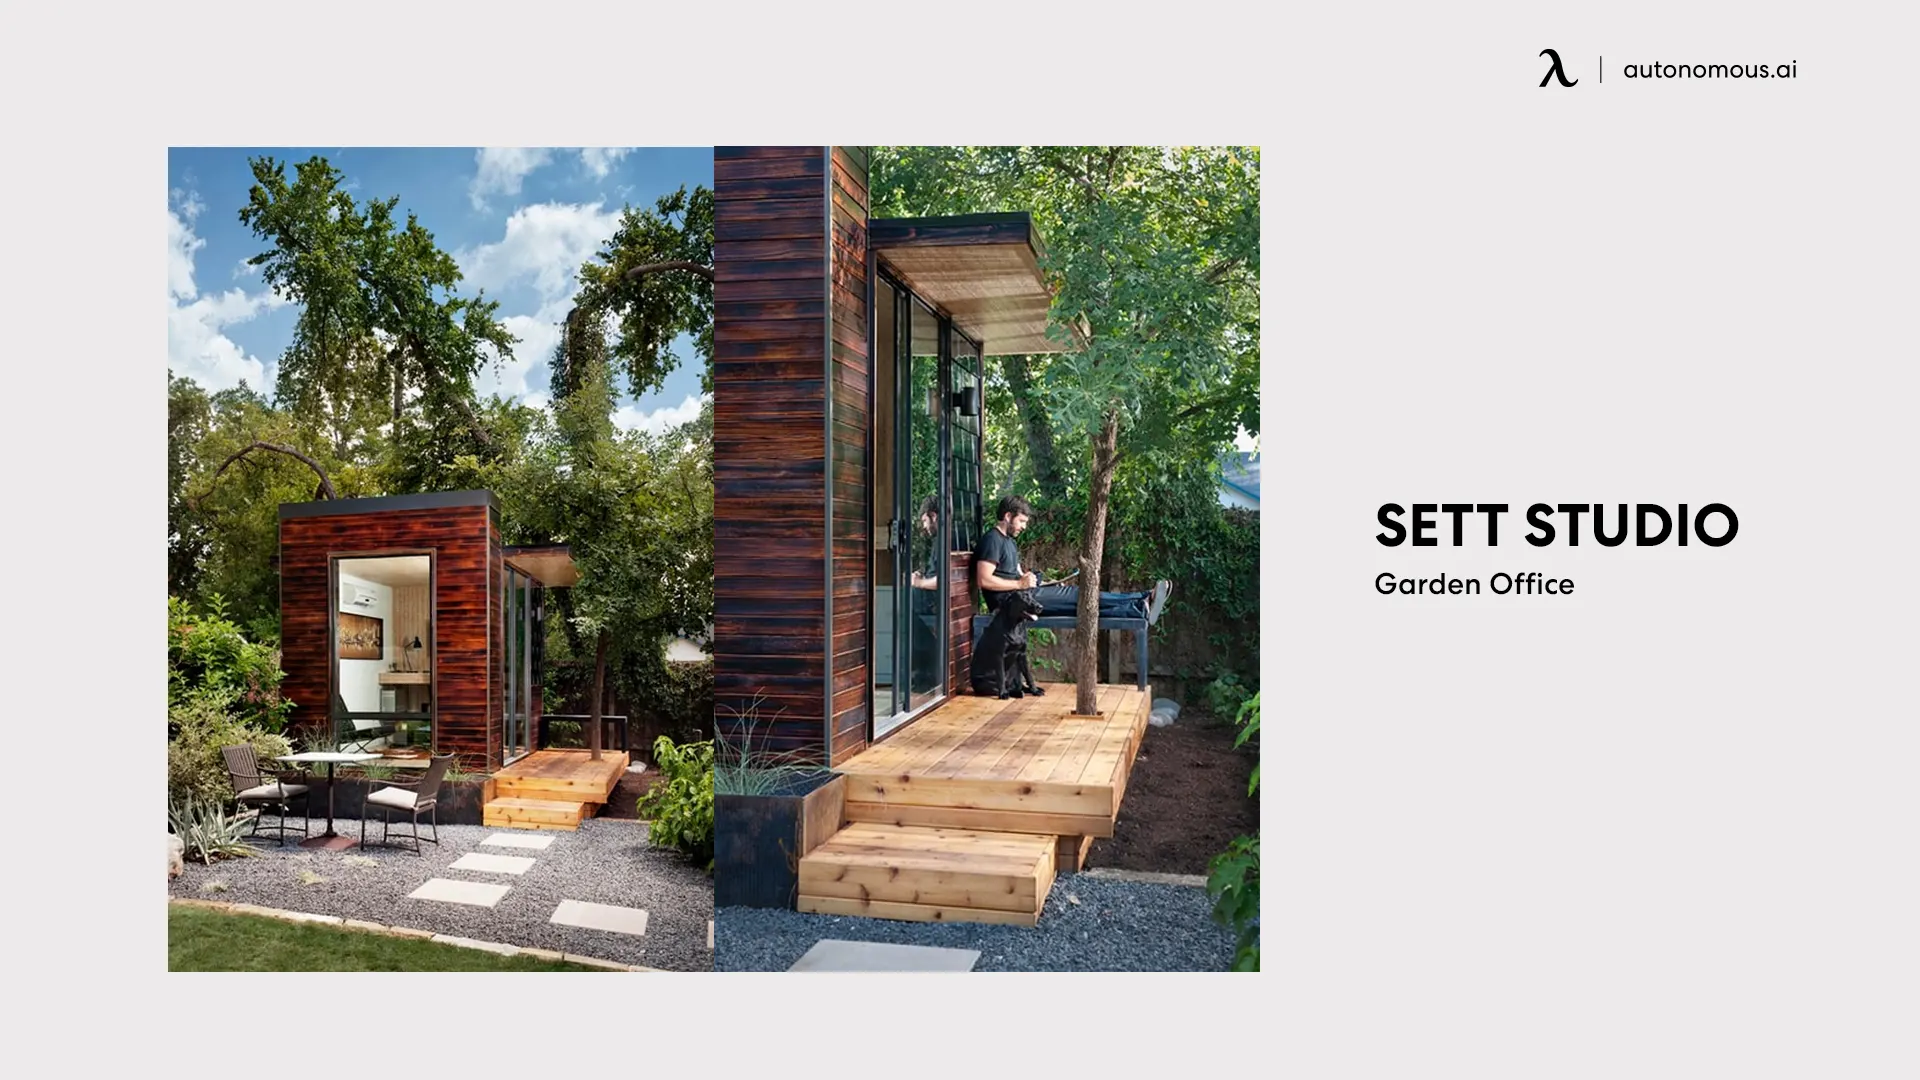 Sett Studio Garden Office - bunk house